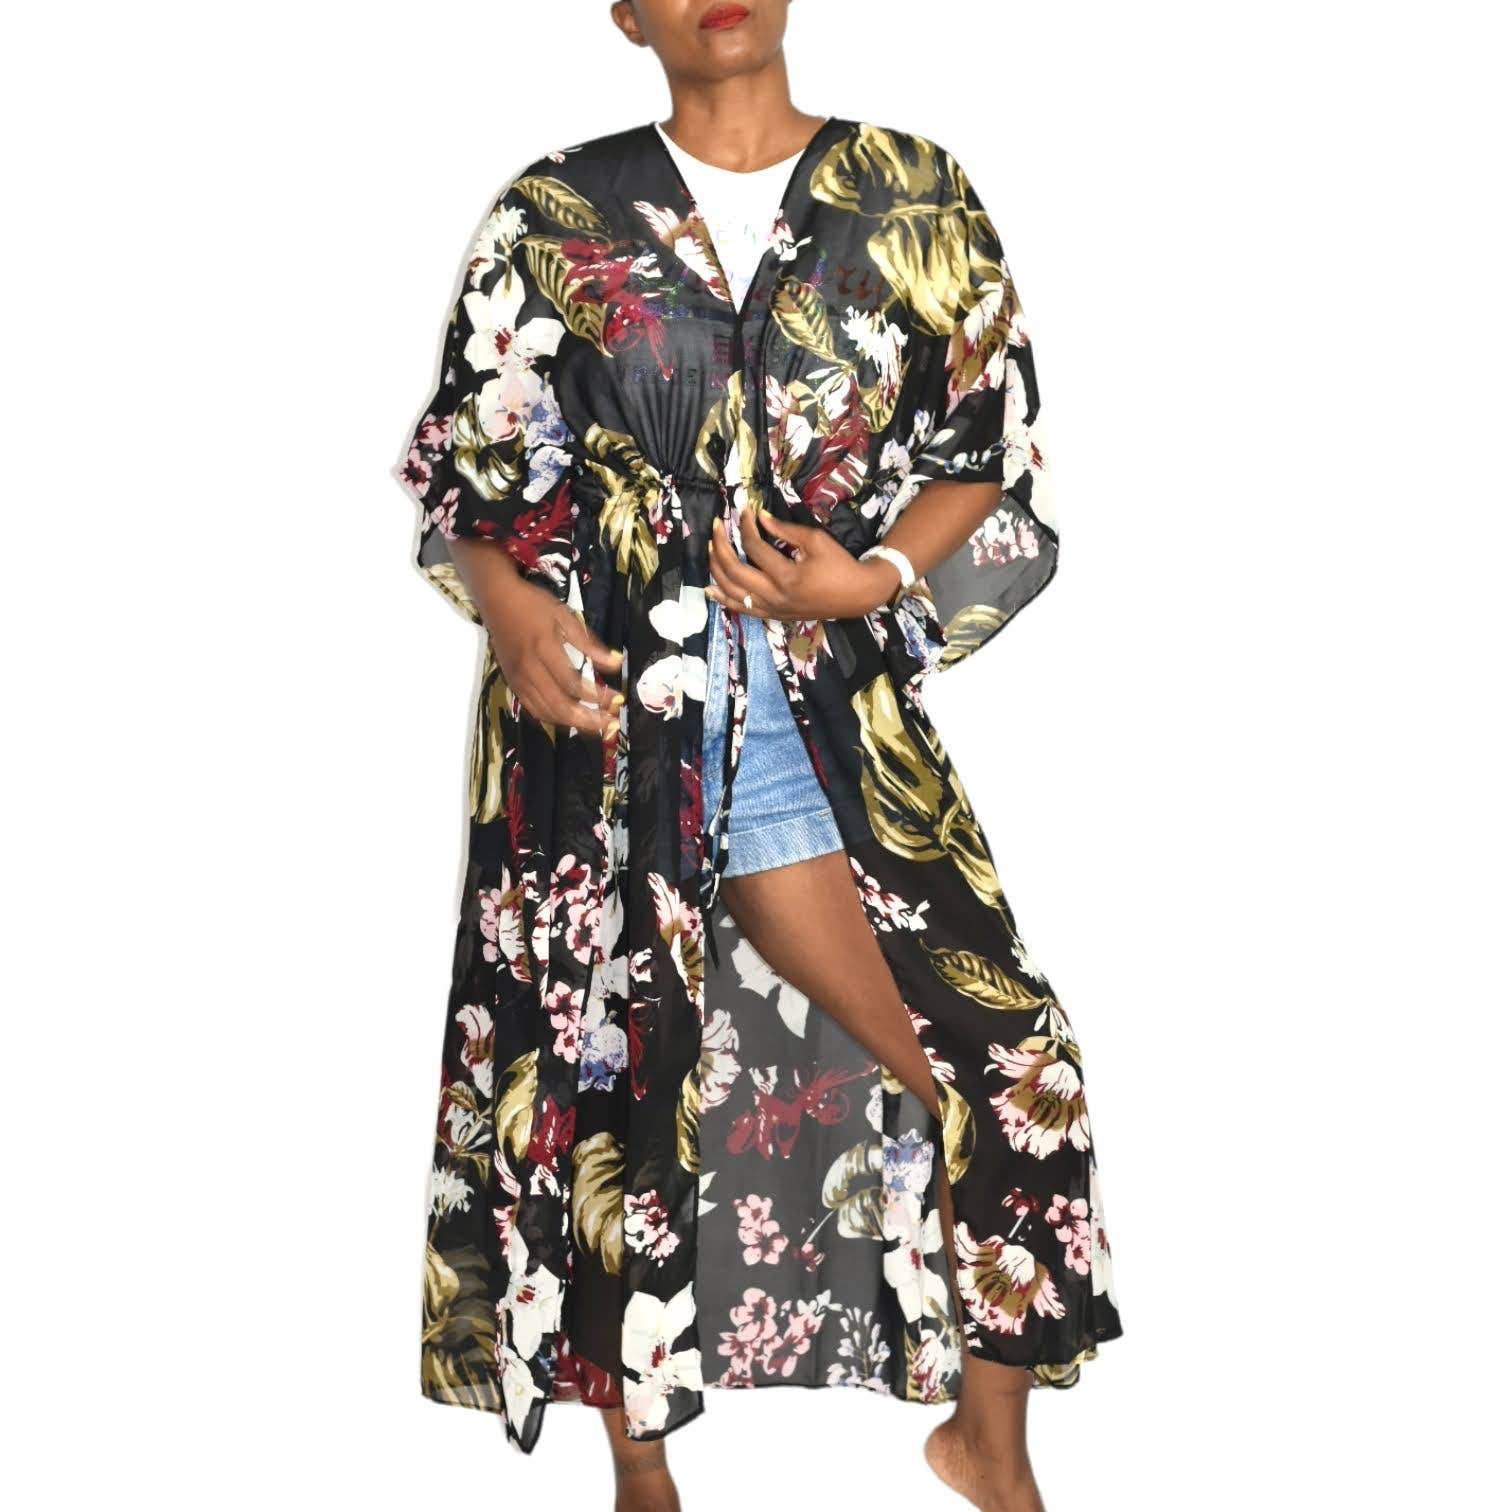 Walter Baker Floral Caftan Tulum Tropical Kimono Cover Up Kimono Sheer One Size